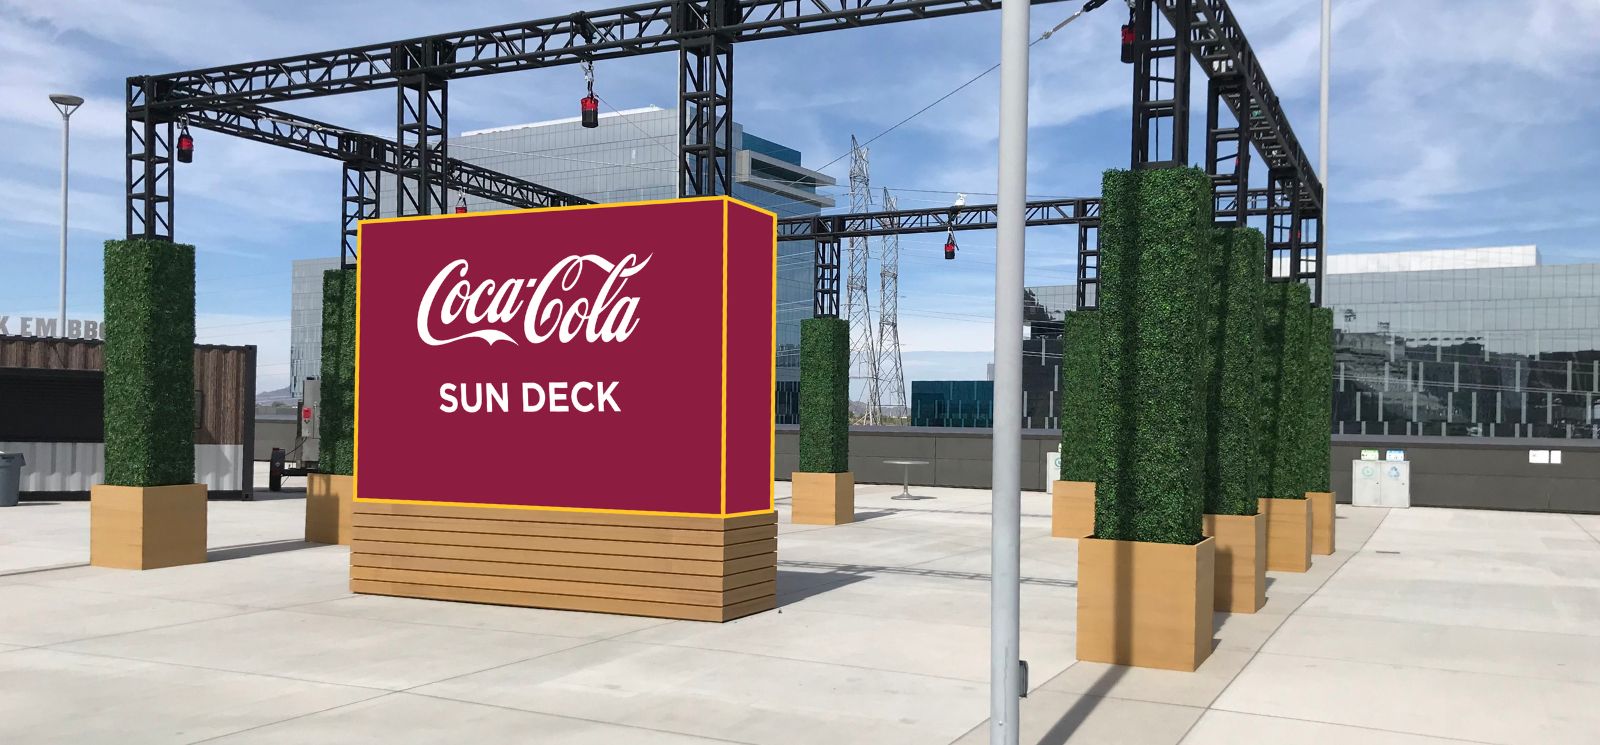 Coca-Cola Structure on the Sun Deck